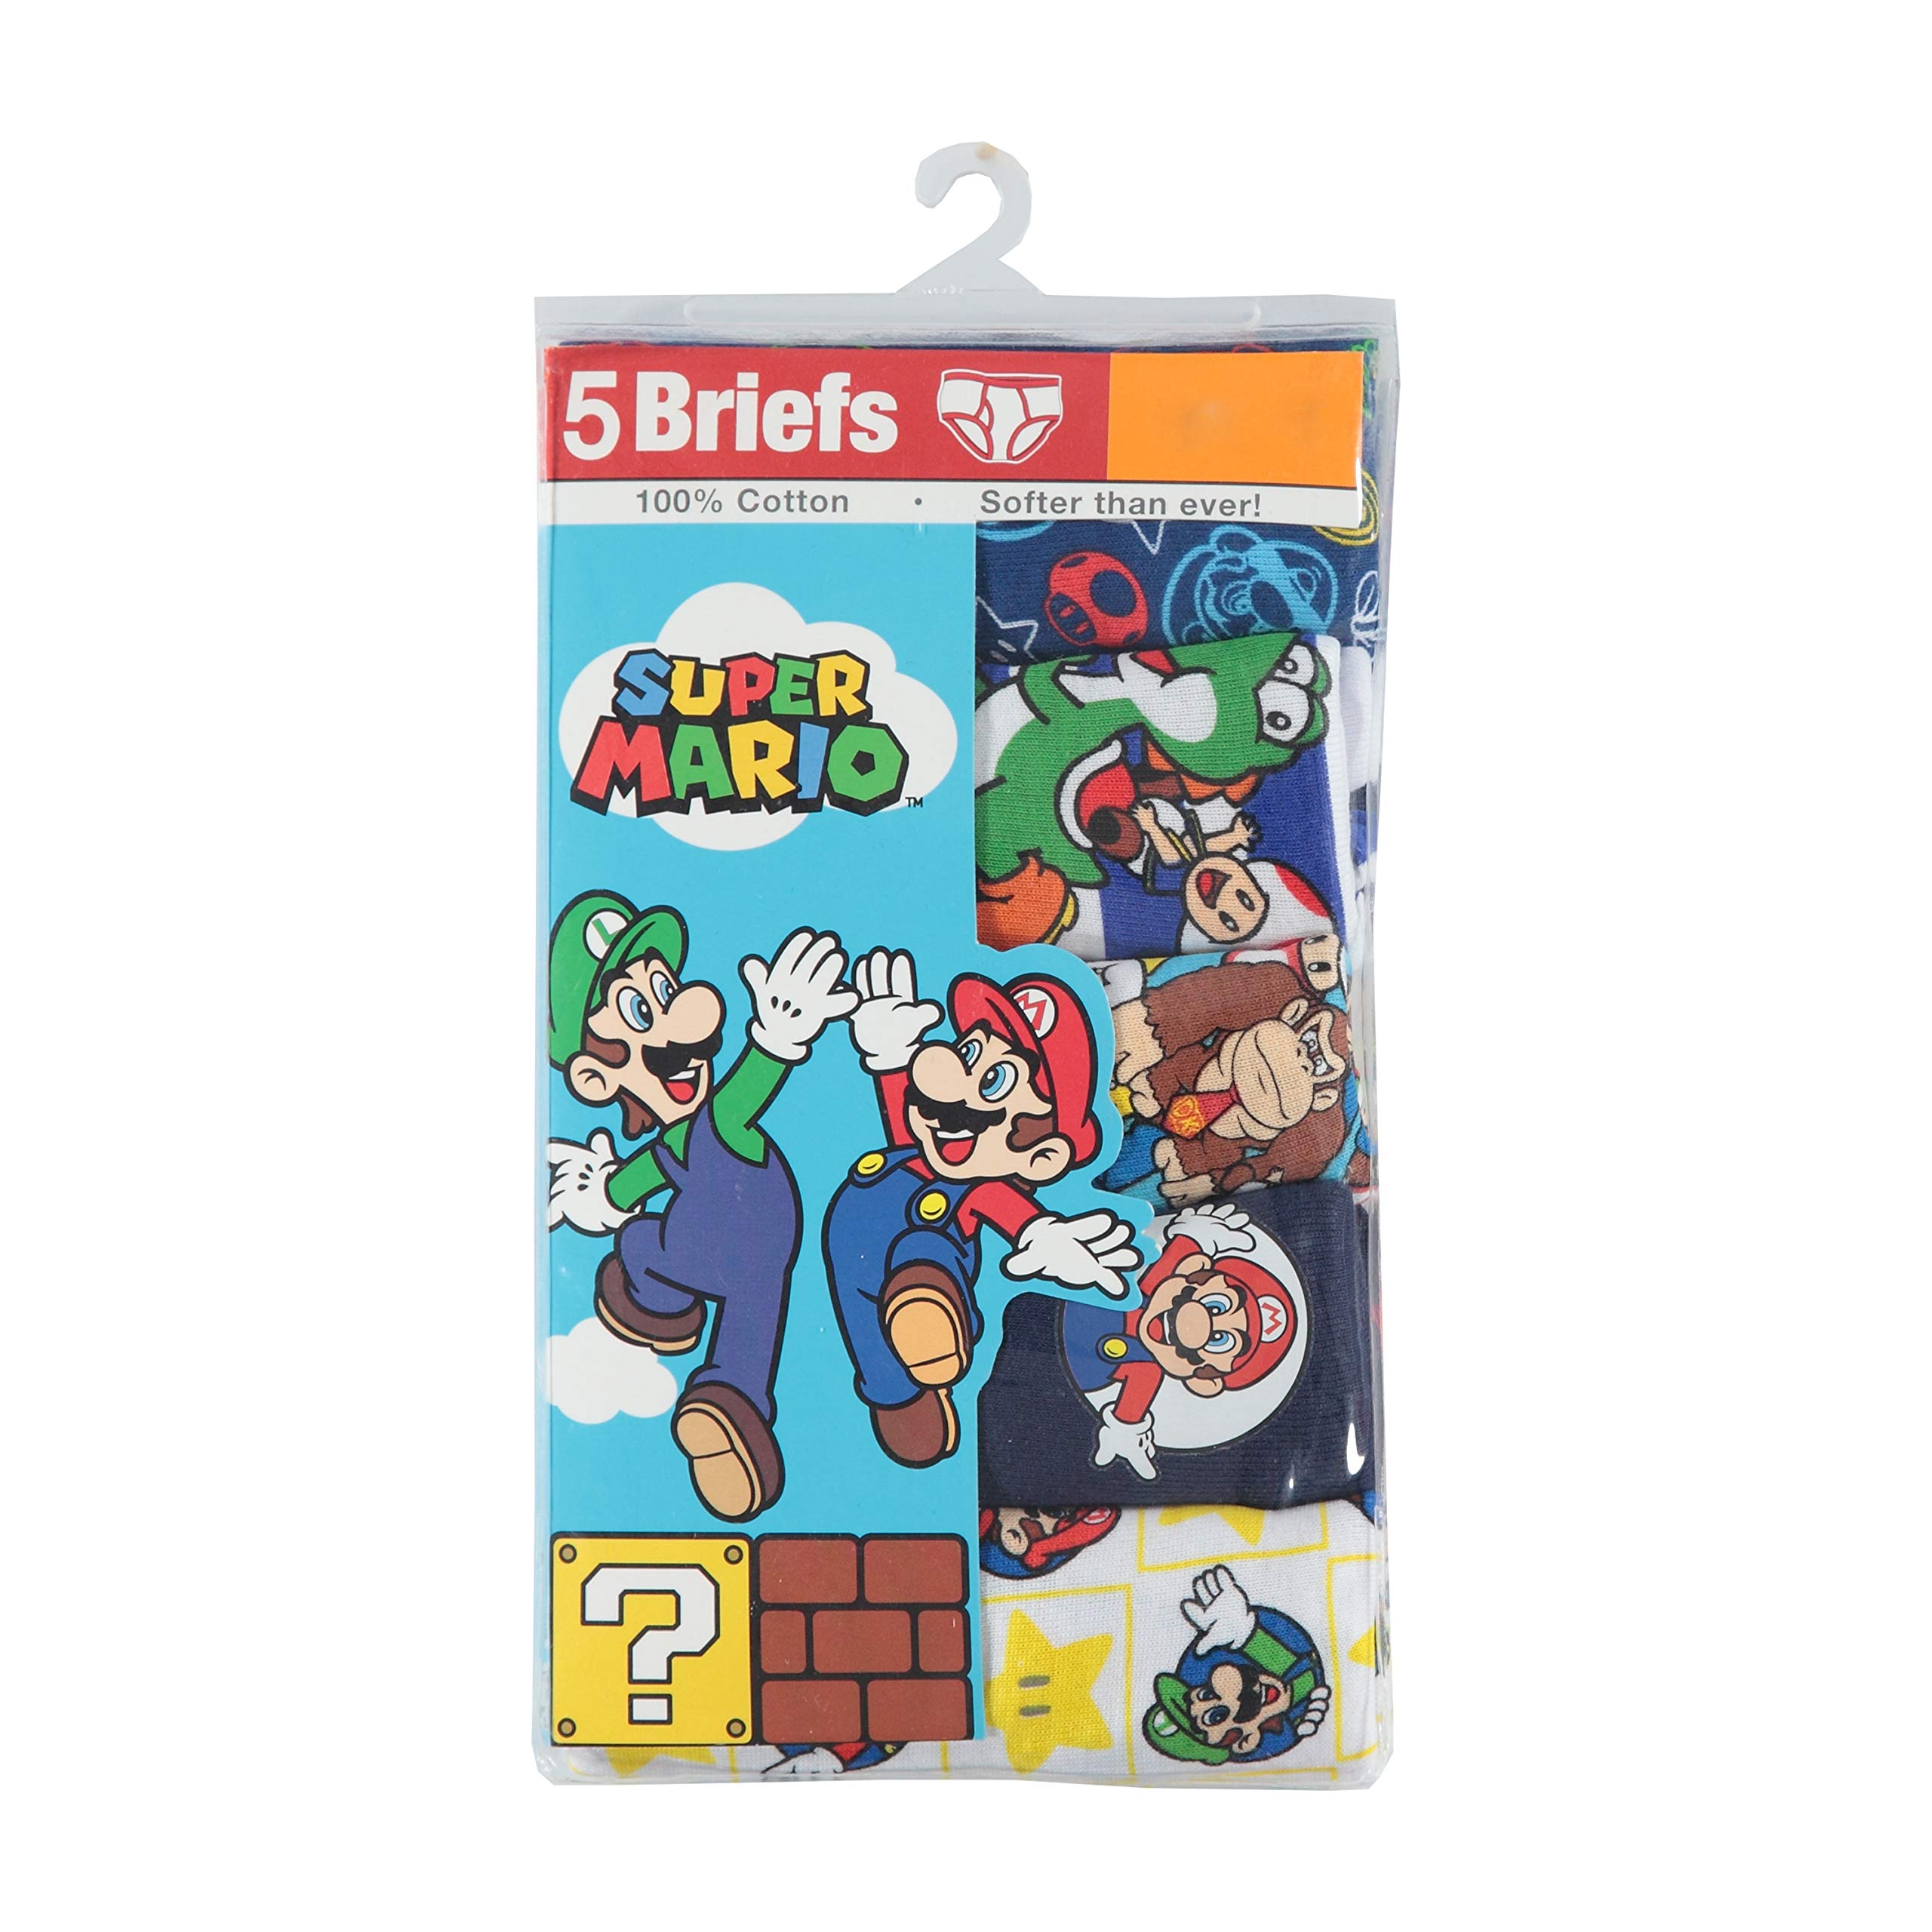 Nintendo Super Mario Underwear and Boxer Briefs with Mario, Luigi, Toad, Yoshi, Peach & Bowser, Sizes 4, 6, 8, 10 and 12